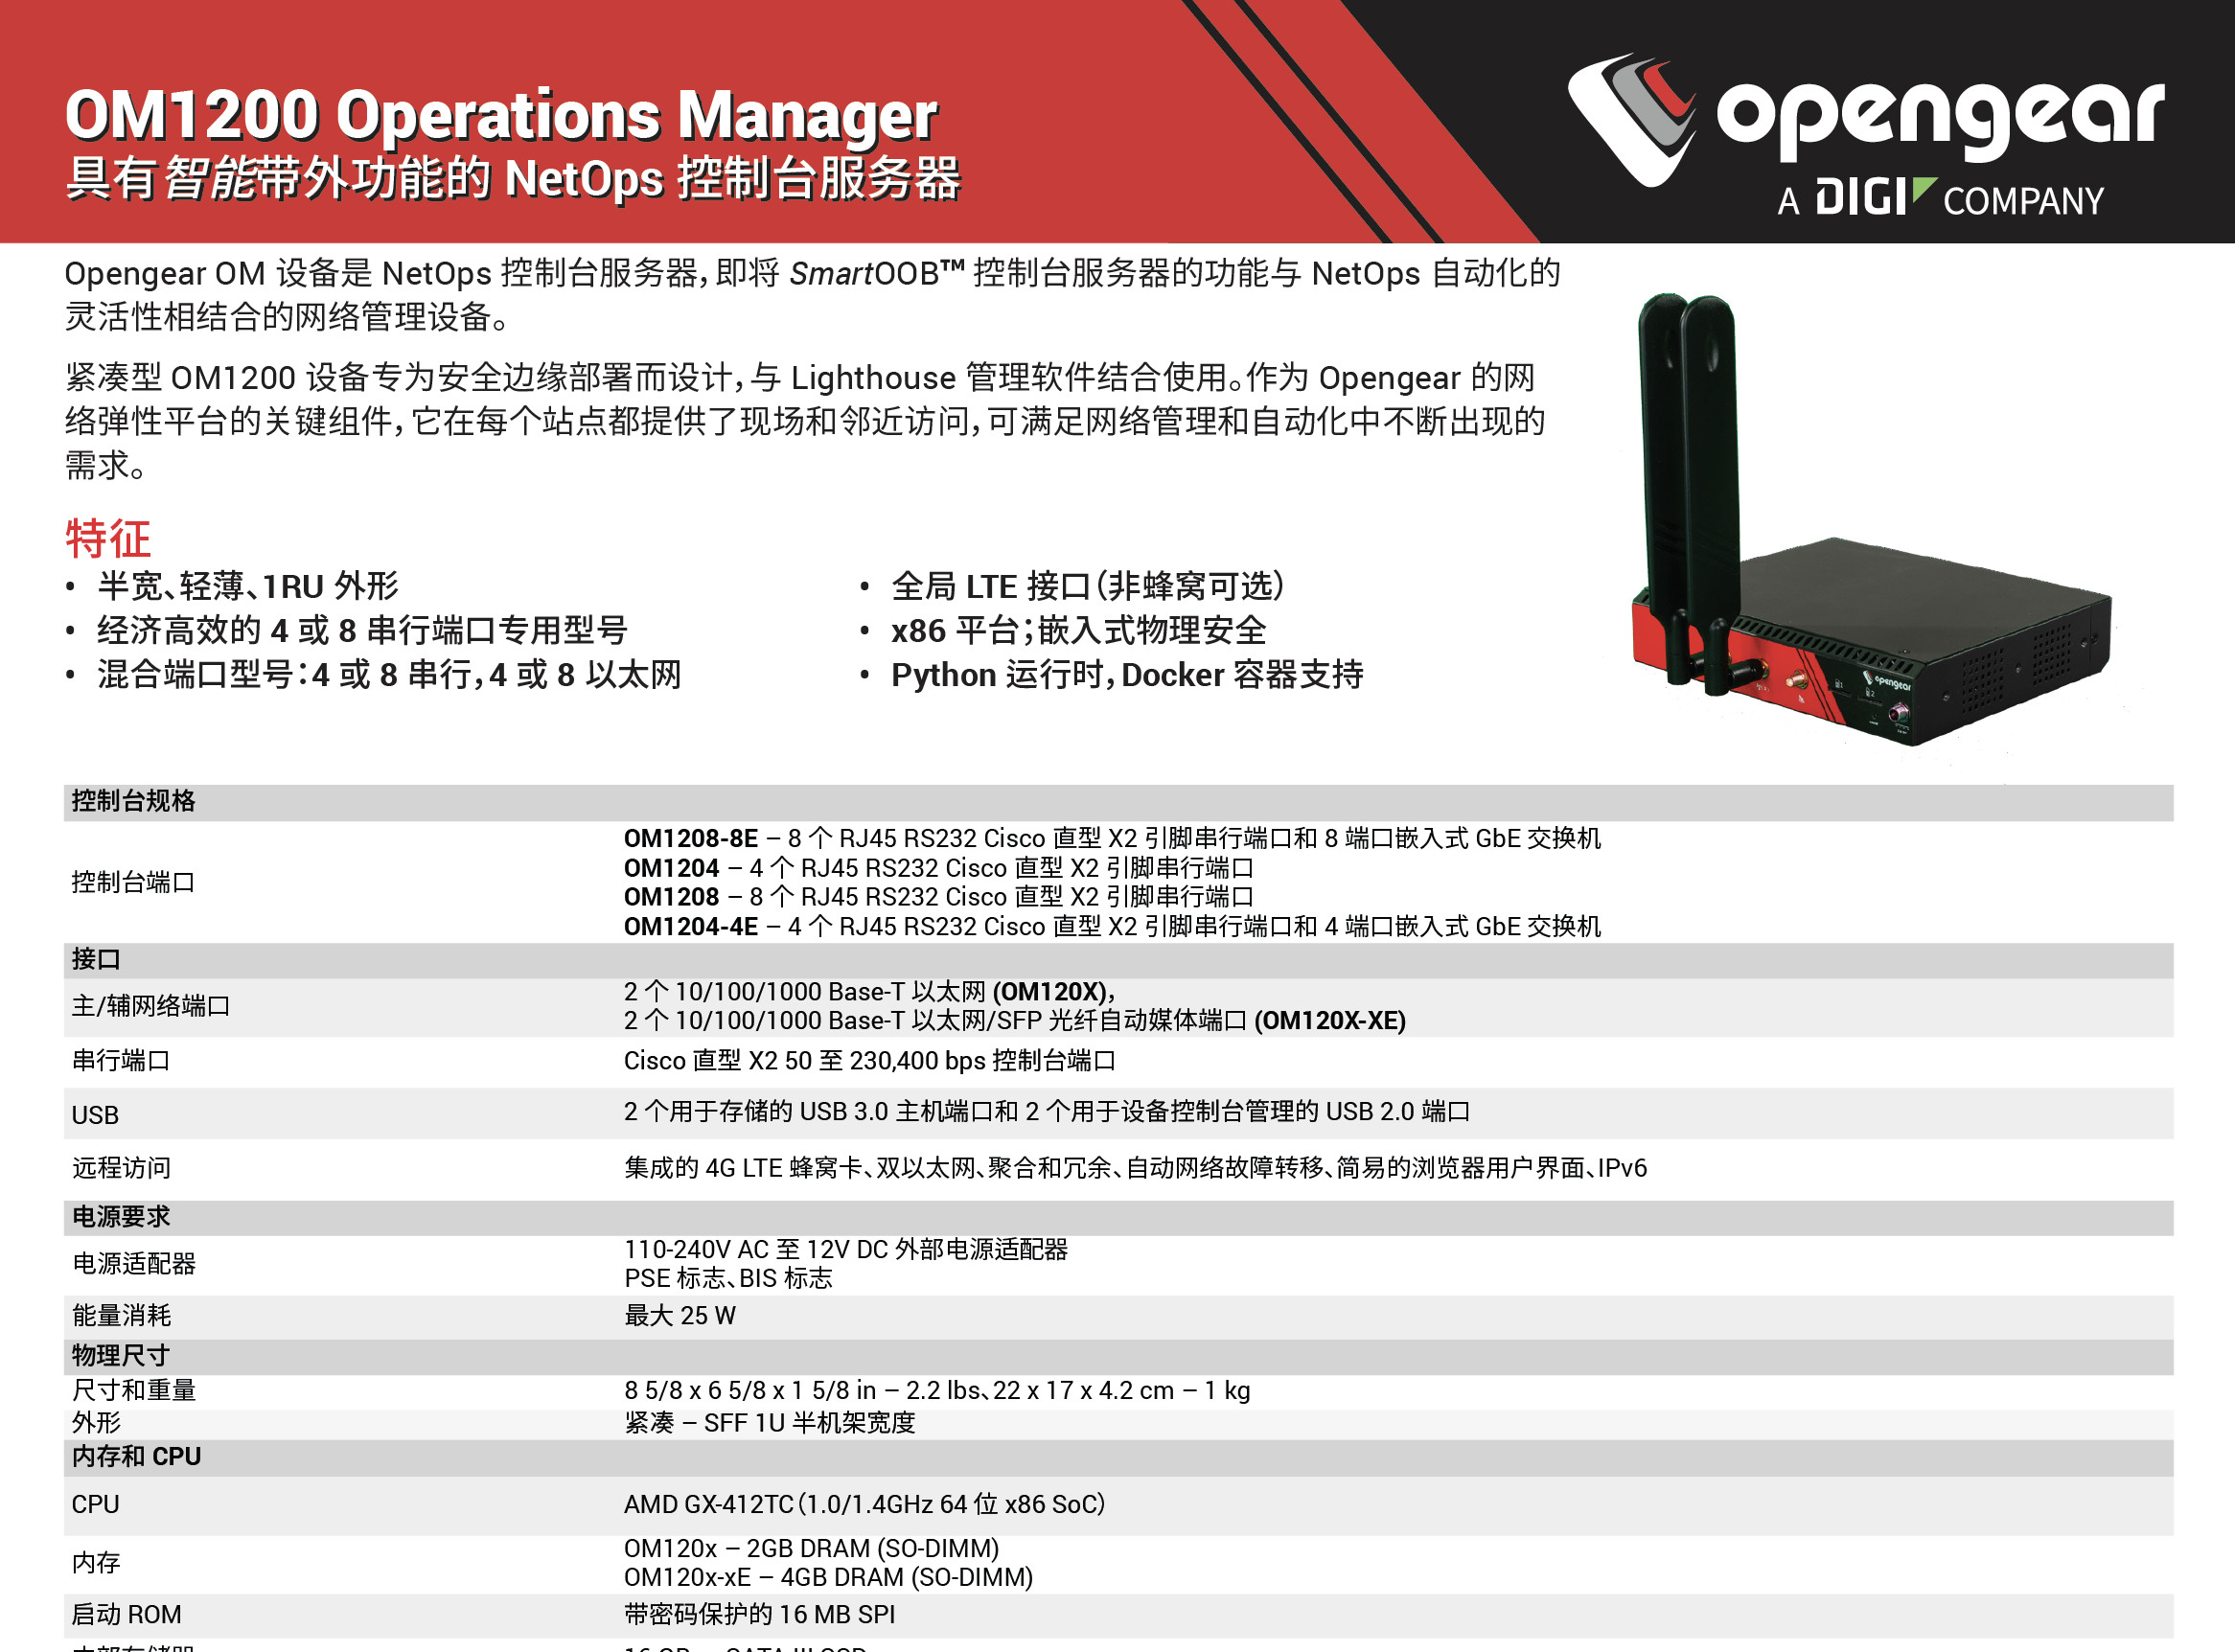 Opengear OGEXTWAR5-ACM70、Opengear OGEXTWAR5-CM71、Opengear OGEXTWAR5-IM72、Opengear OGEXTWAR5-OM12、Opengear OGEXTWAR5-OM22、Opengear OGEXTWAR6-ACM70、Opengear OGEXTWAR6-CM71、Opengear OGEXTWAR6-IM72、Opengear OGEXTWAR6-OM12、Opengear OGEXTWAR6-OM22、Opengear OM1204-L、OGEXTWAR5-OM12、DG-PSIC-CUST、DG-SIM-ATT